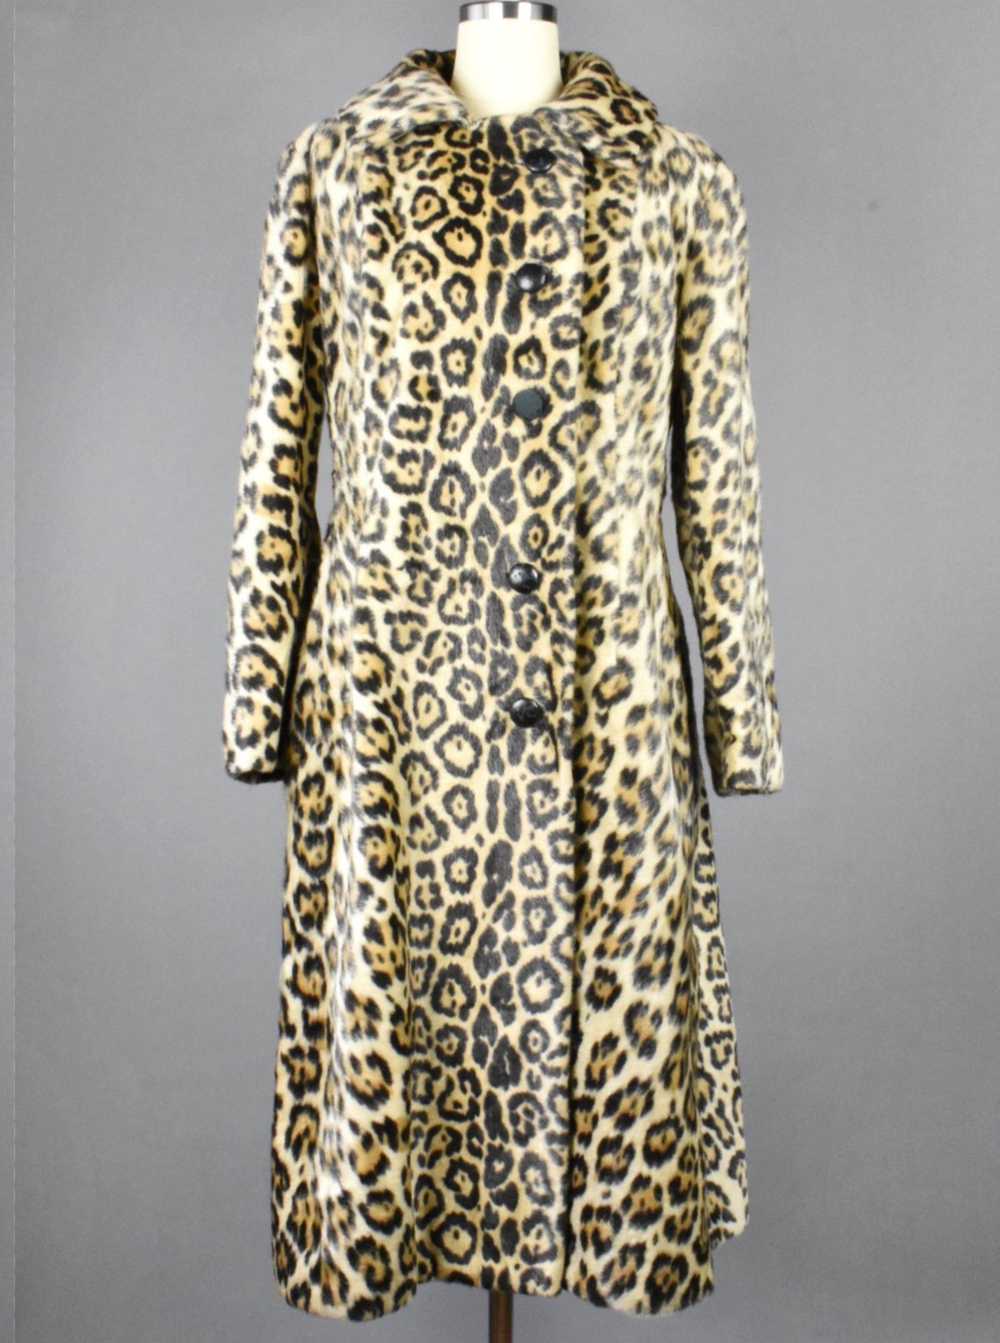 Leopard Print Faux Fur Coat by Safari - image 1